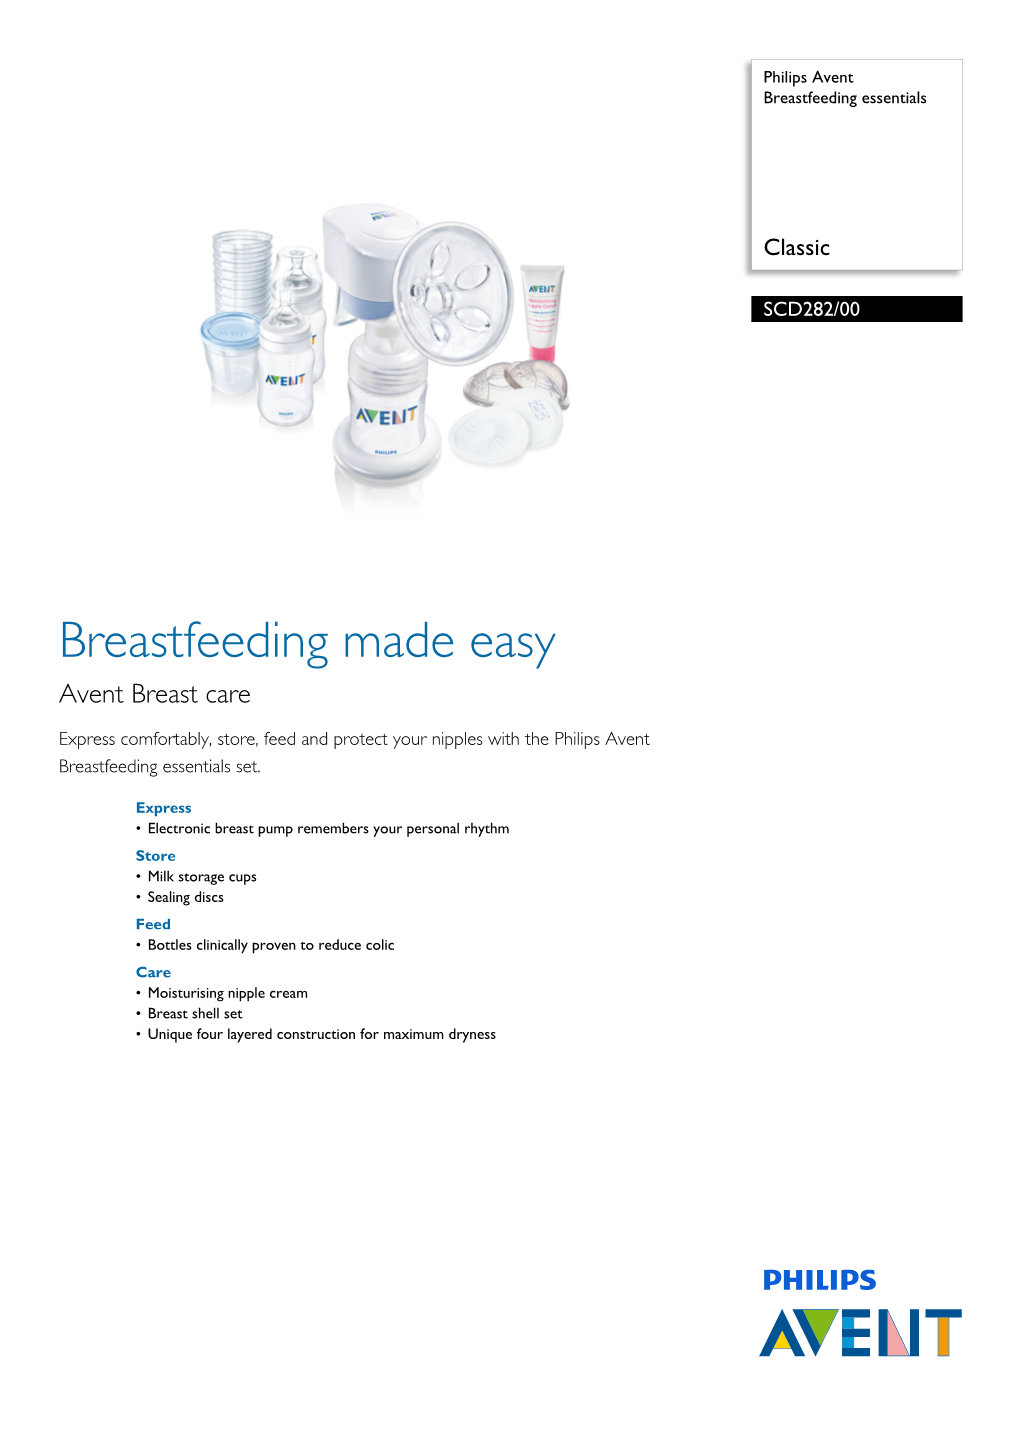 SCD282/00 Philips Breastfeeding Essentials